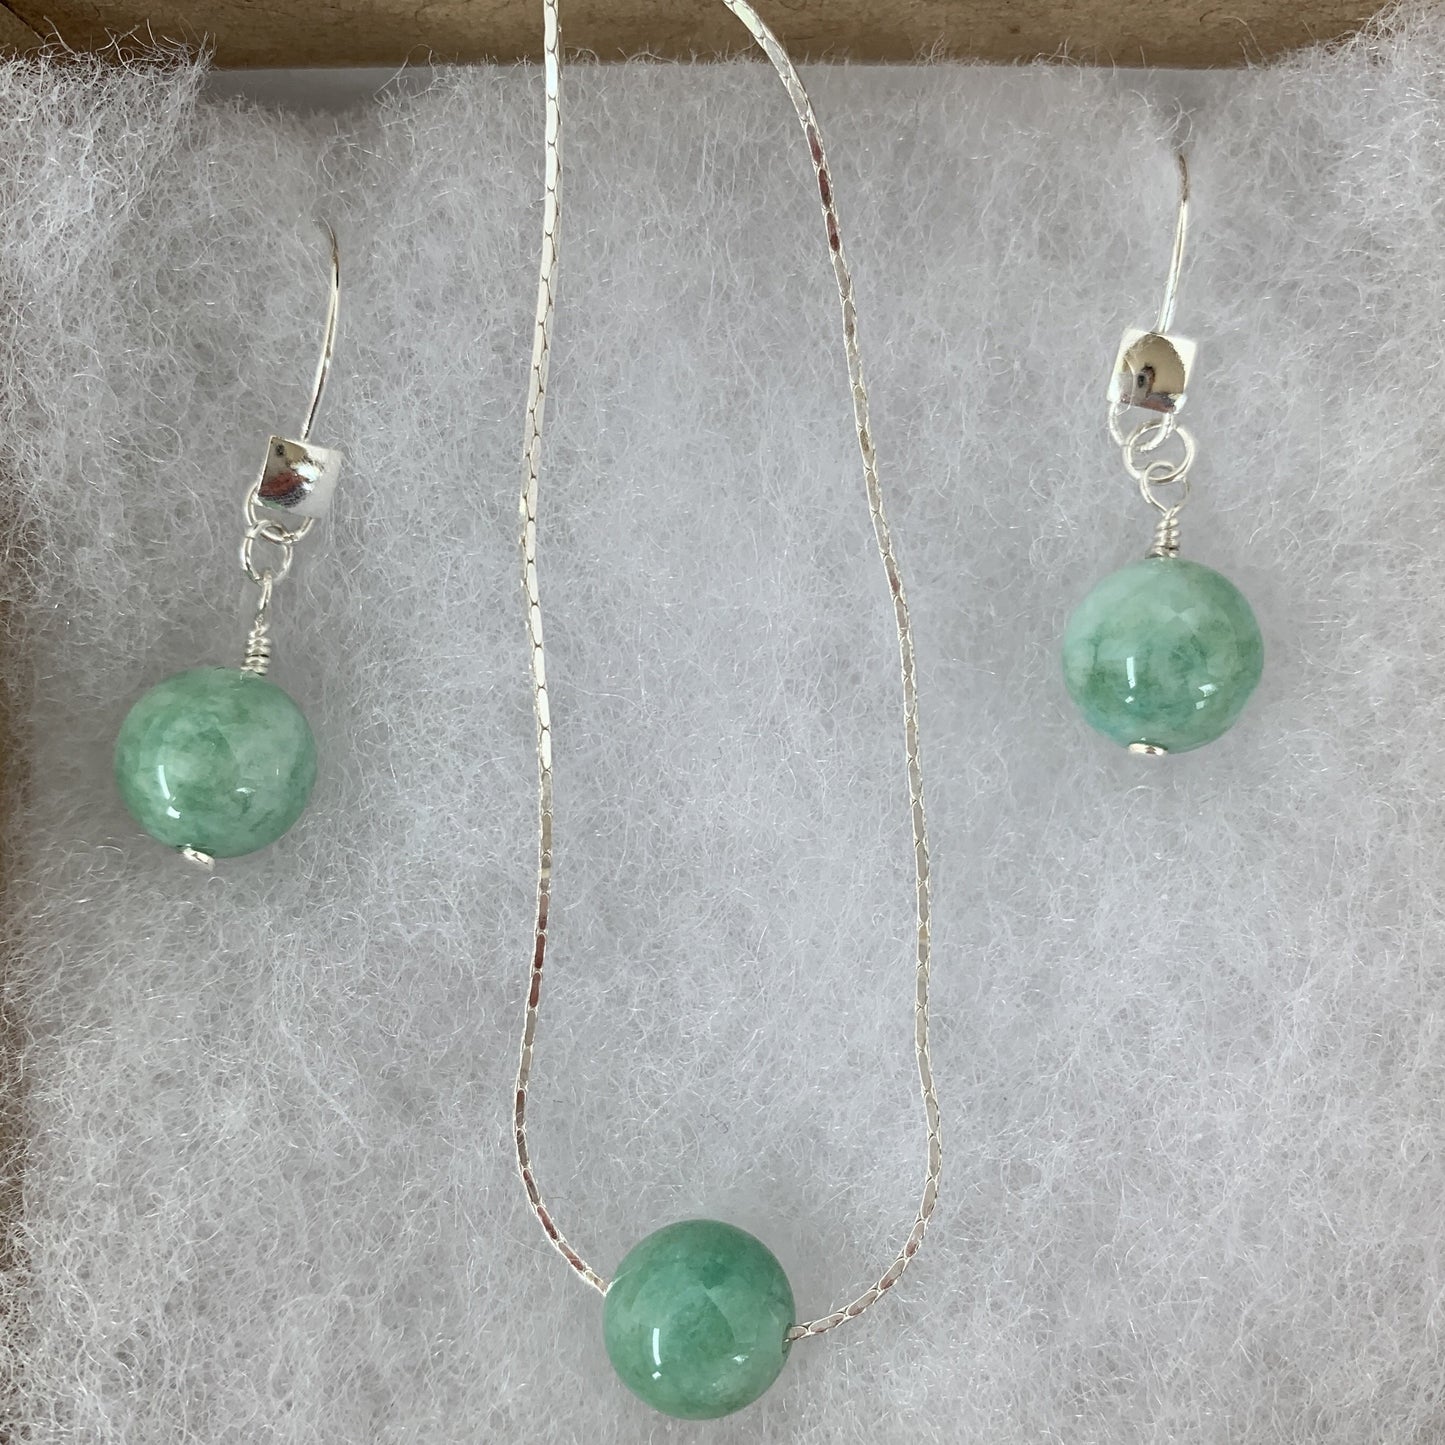 Natural Burma jade pendant and earrings set